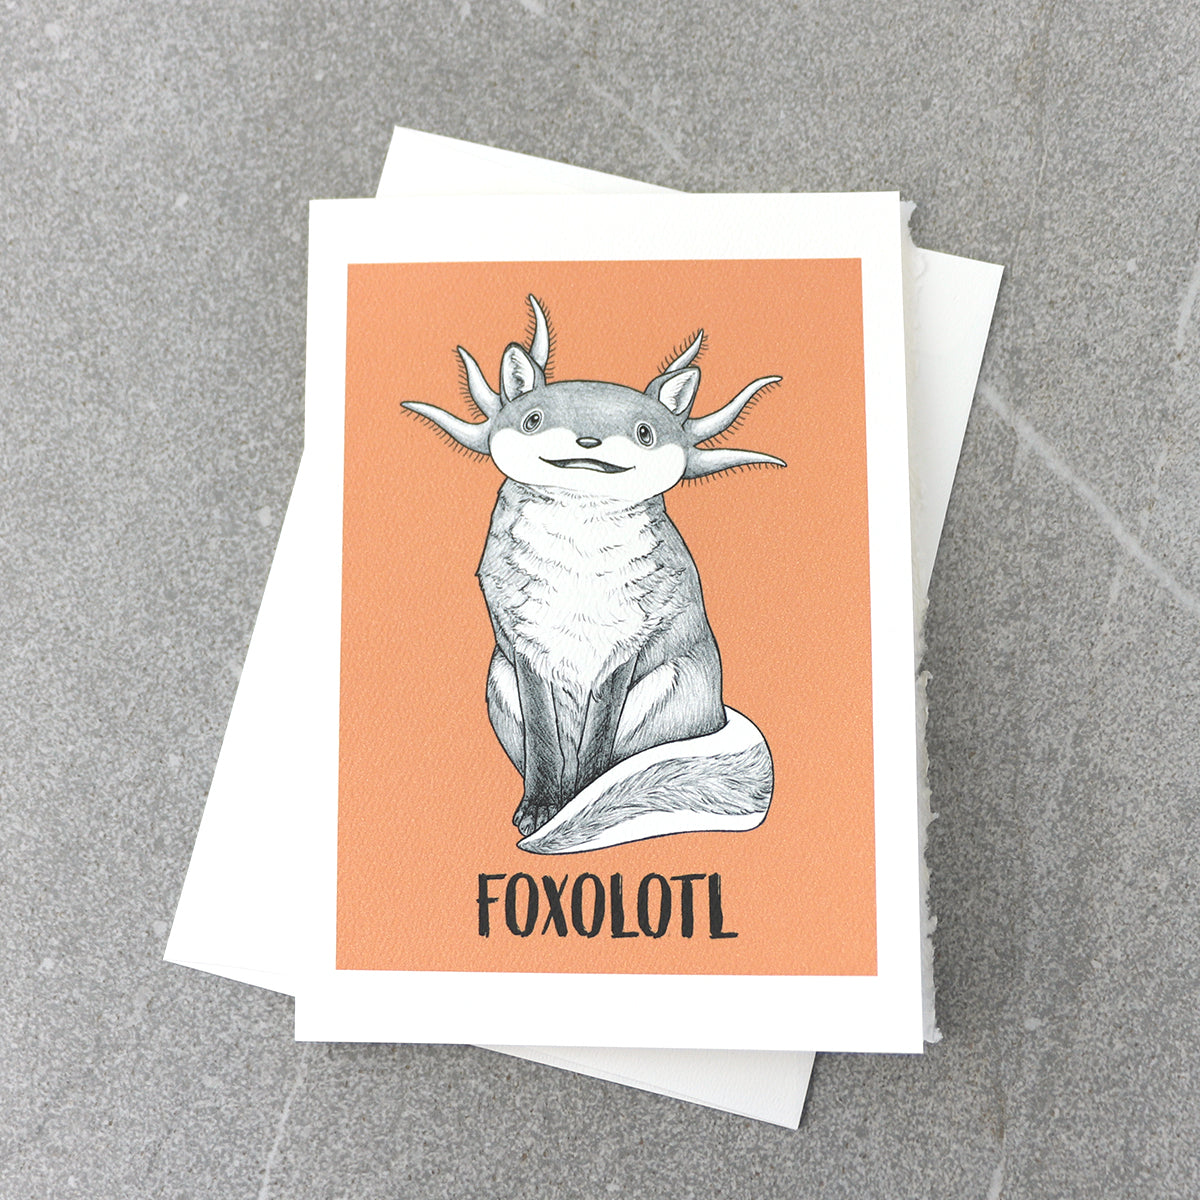 Foxolotl 5x7" Greeting Card